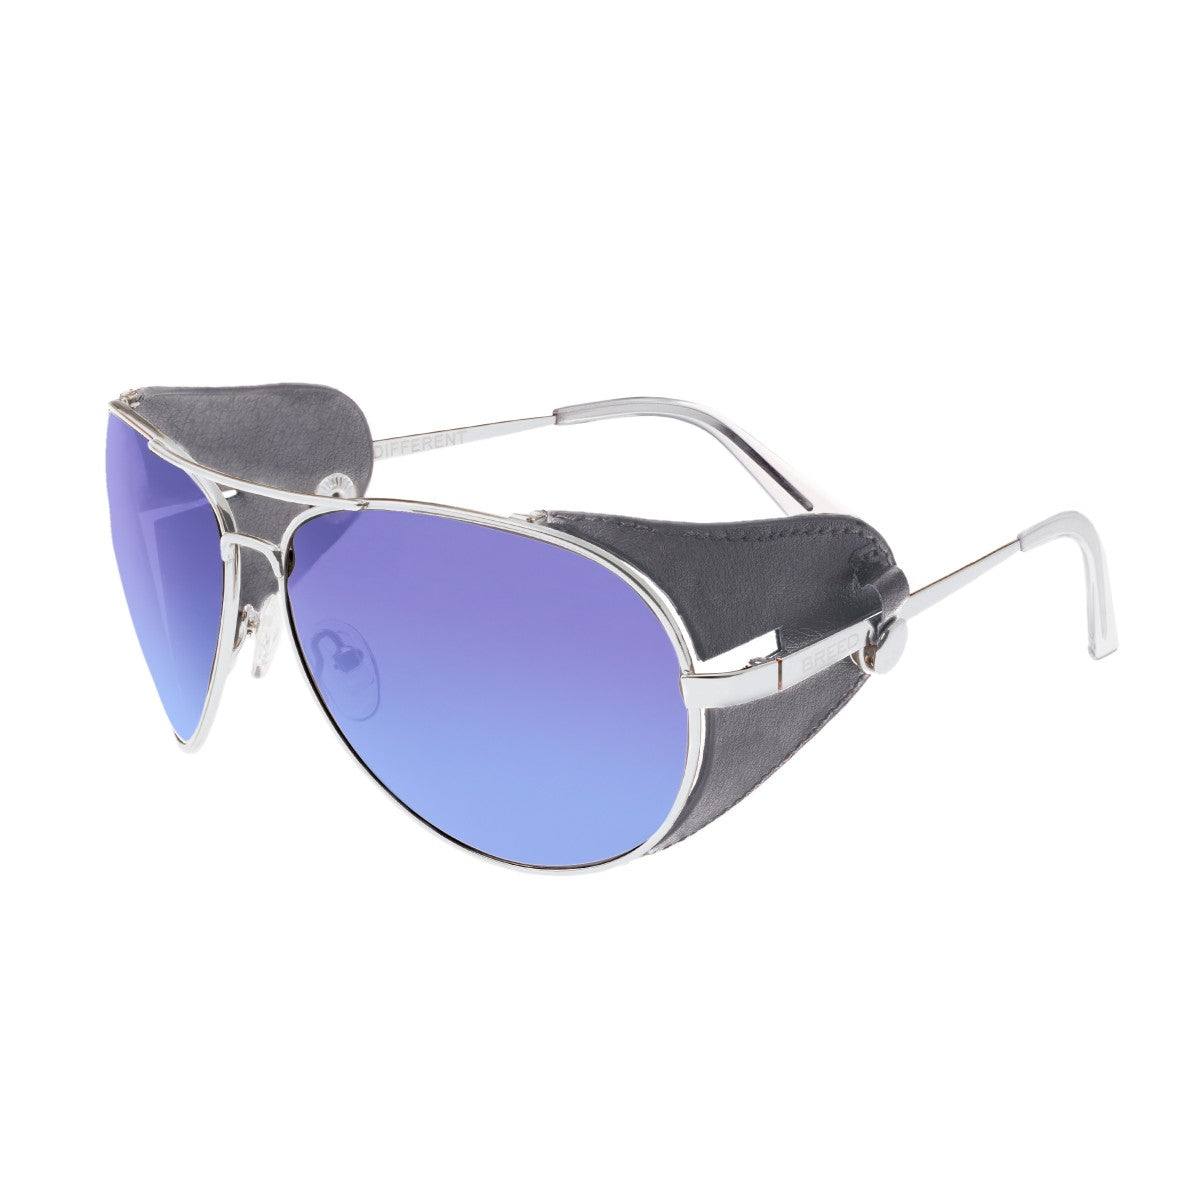 Breed Eclipse Titanium Polarized Sunglasses - Silver/Purple-Blue - BSG048GY